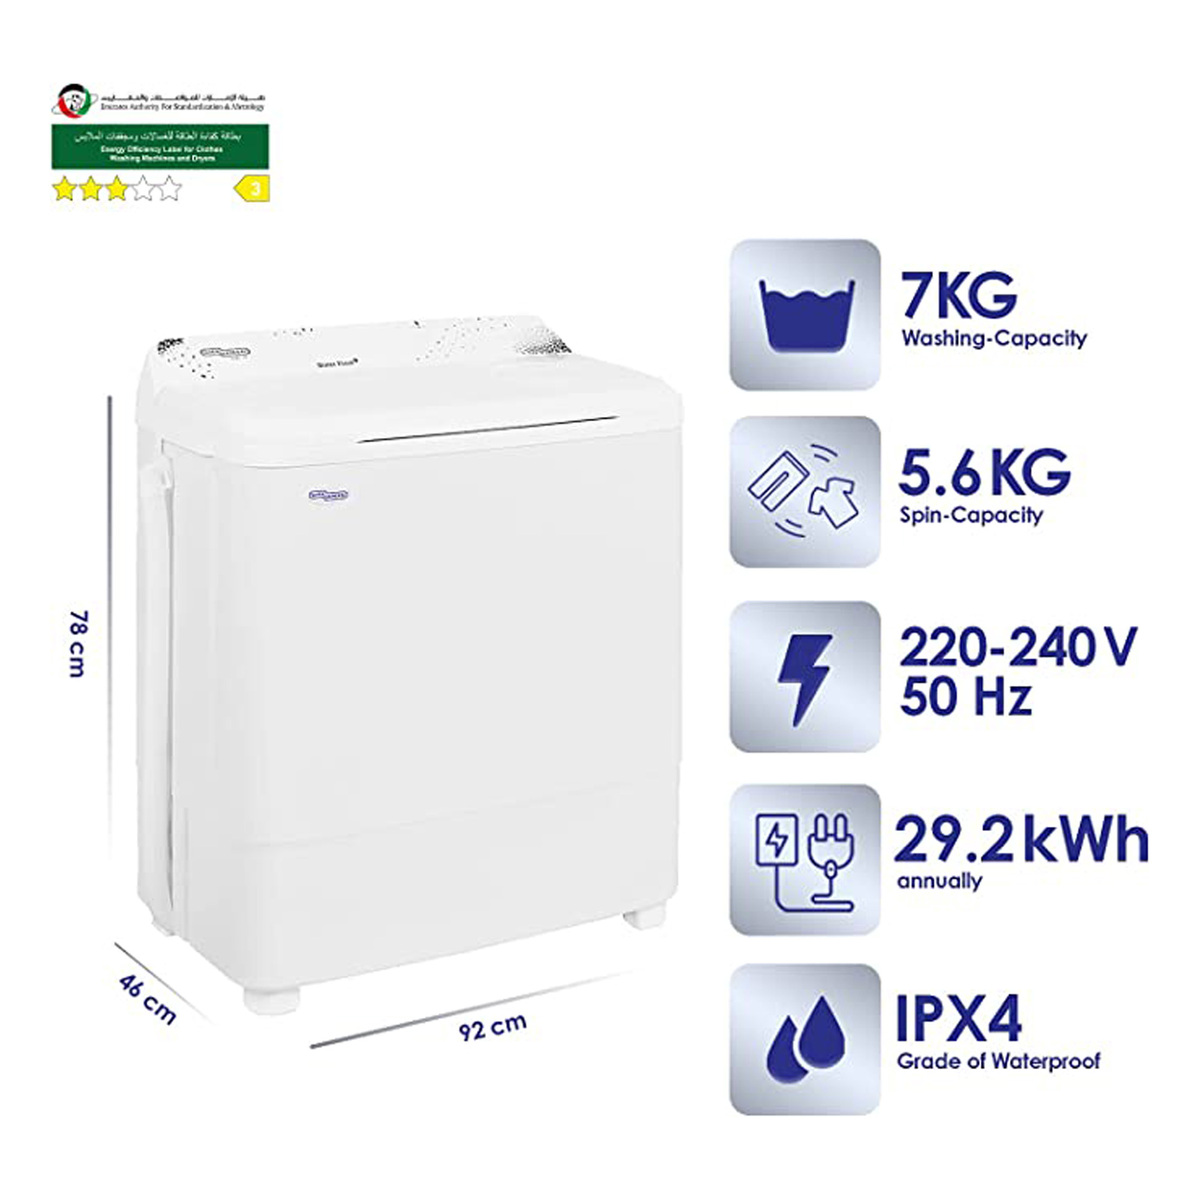 Super General Semi-Automatic Washing Machine, 7 kg, White, SGW-77-N